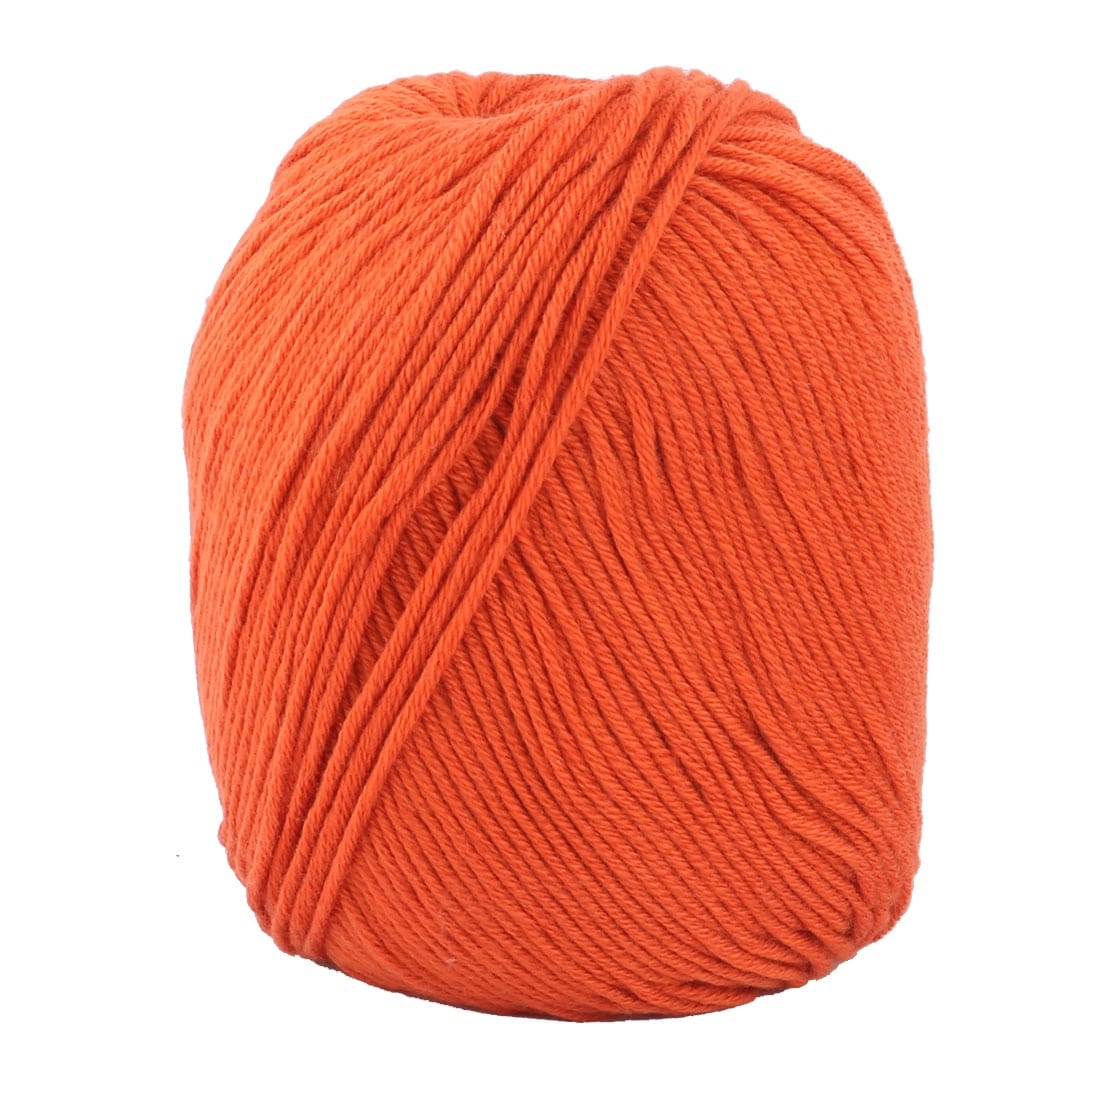 Acrylic Fiber Hat Scarf Handicraft Gift Knitting Needle Weaving